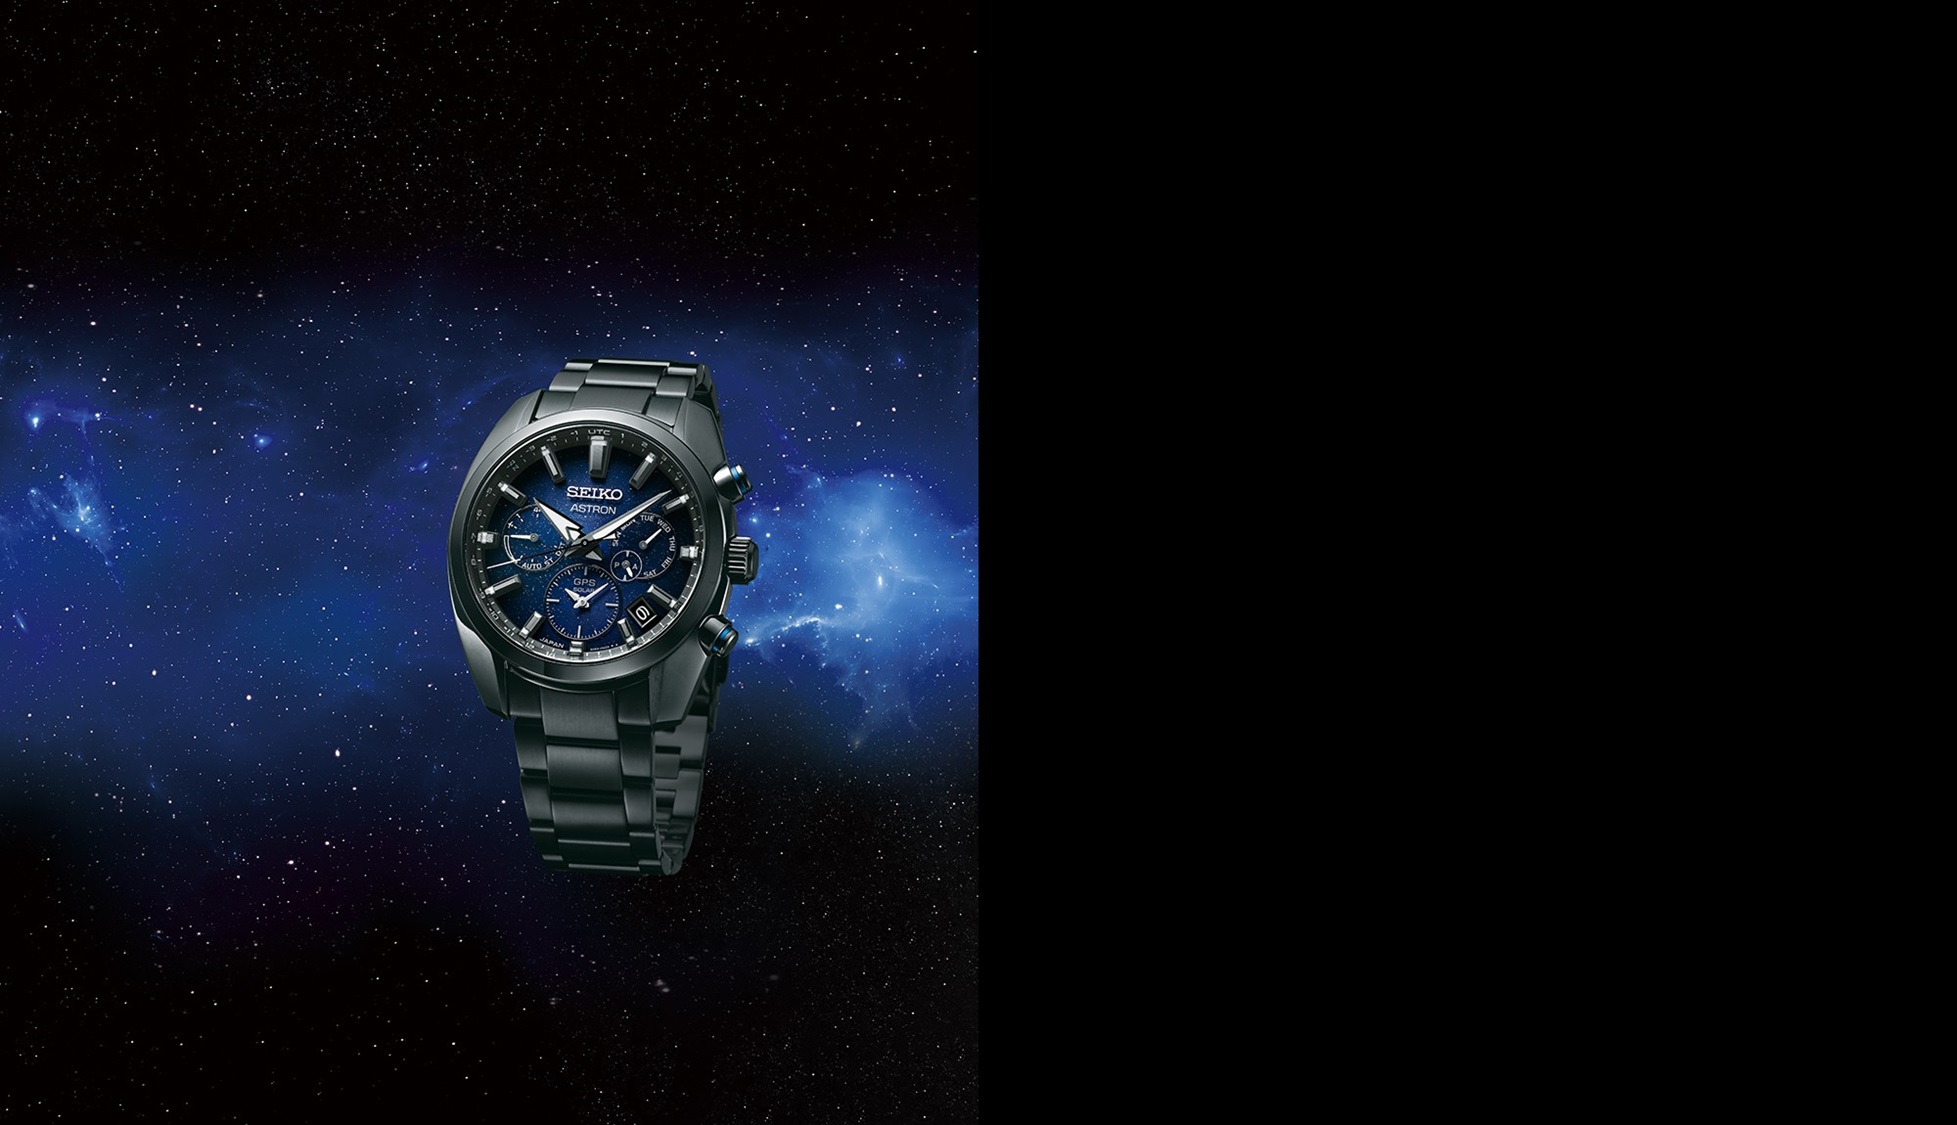 The Astron GPS Solar 5X Dual-Time | Seiko Watch Corporation